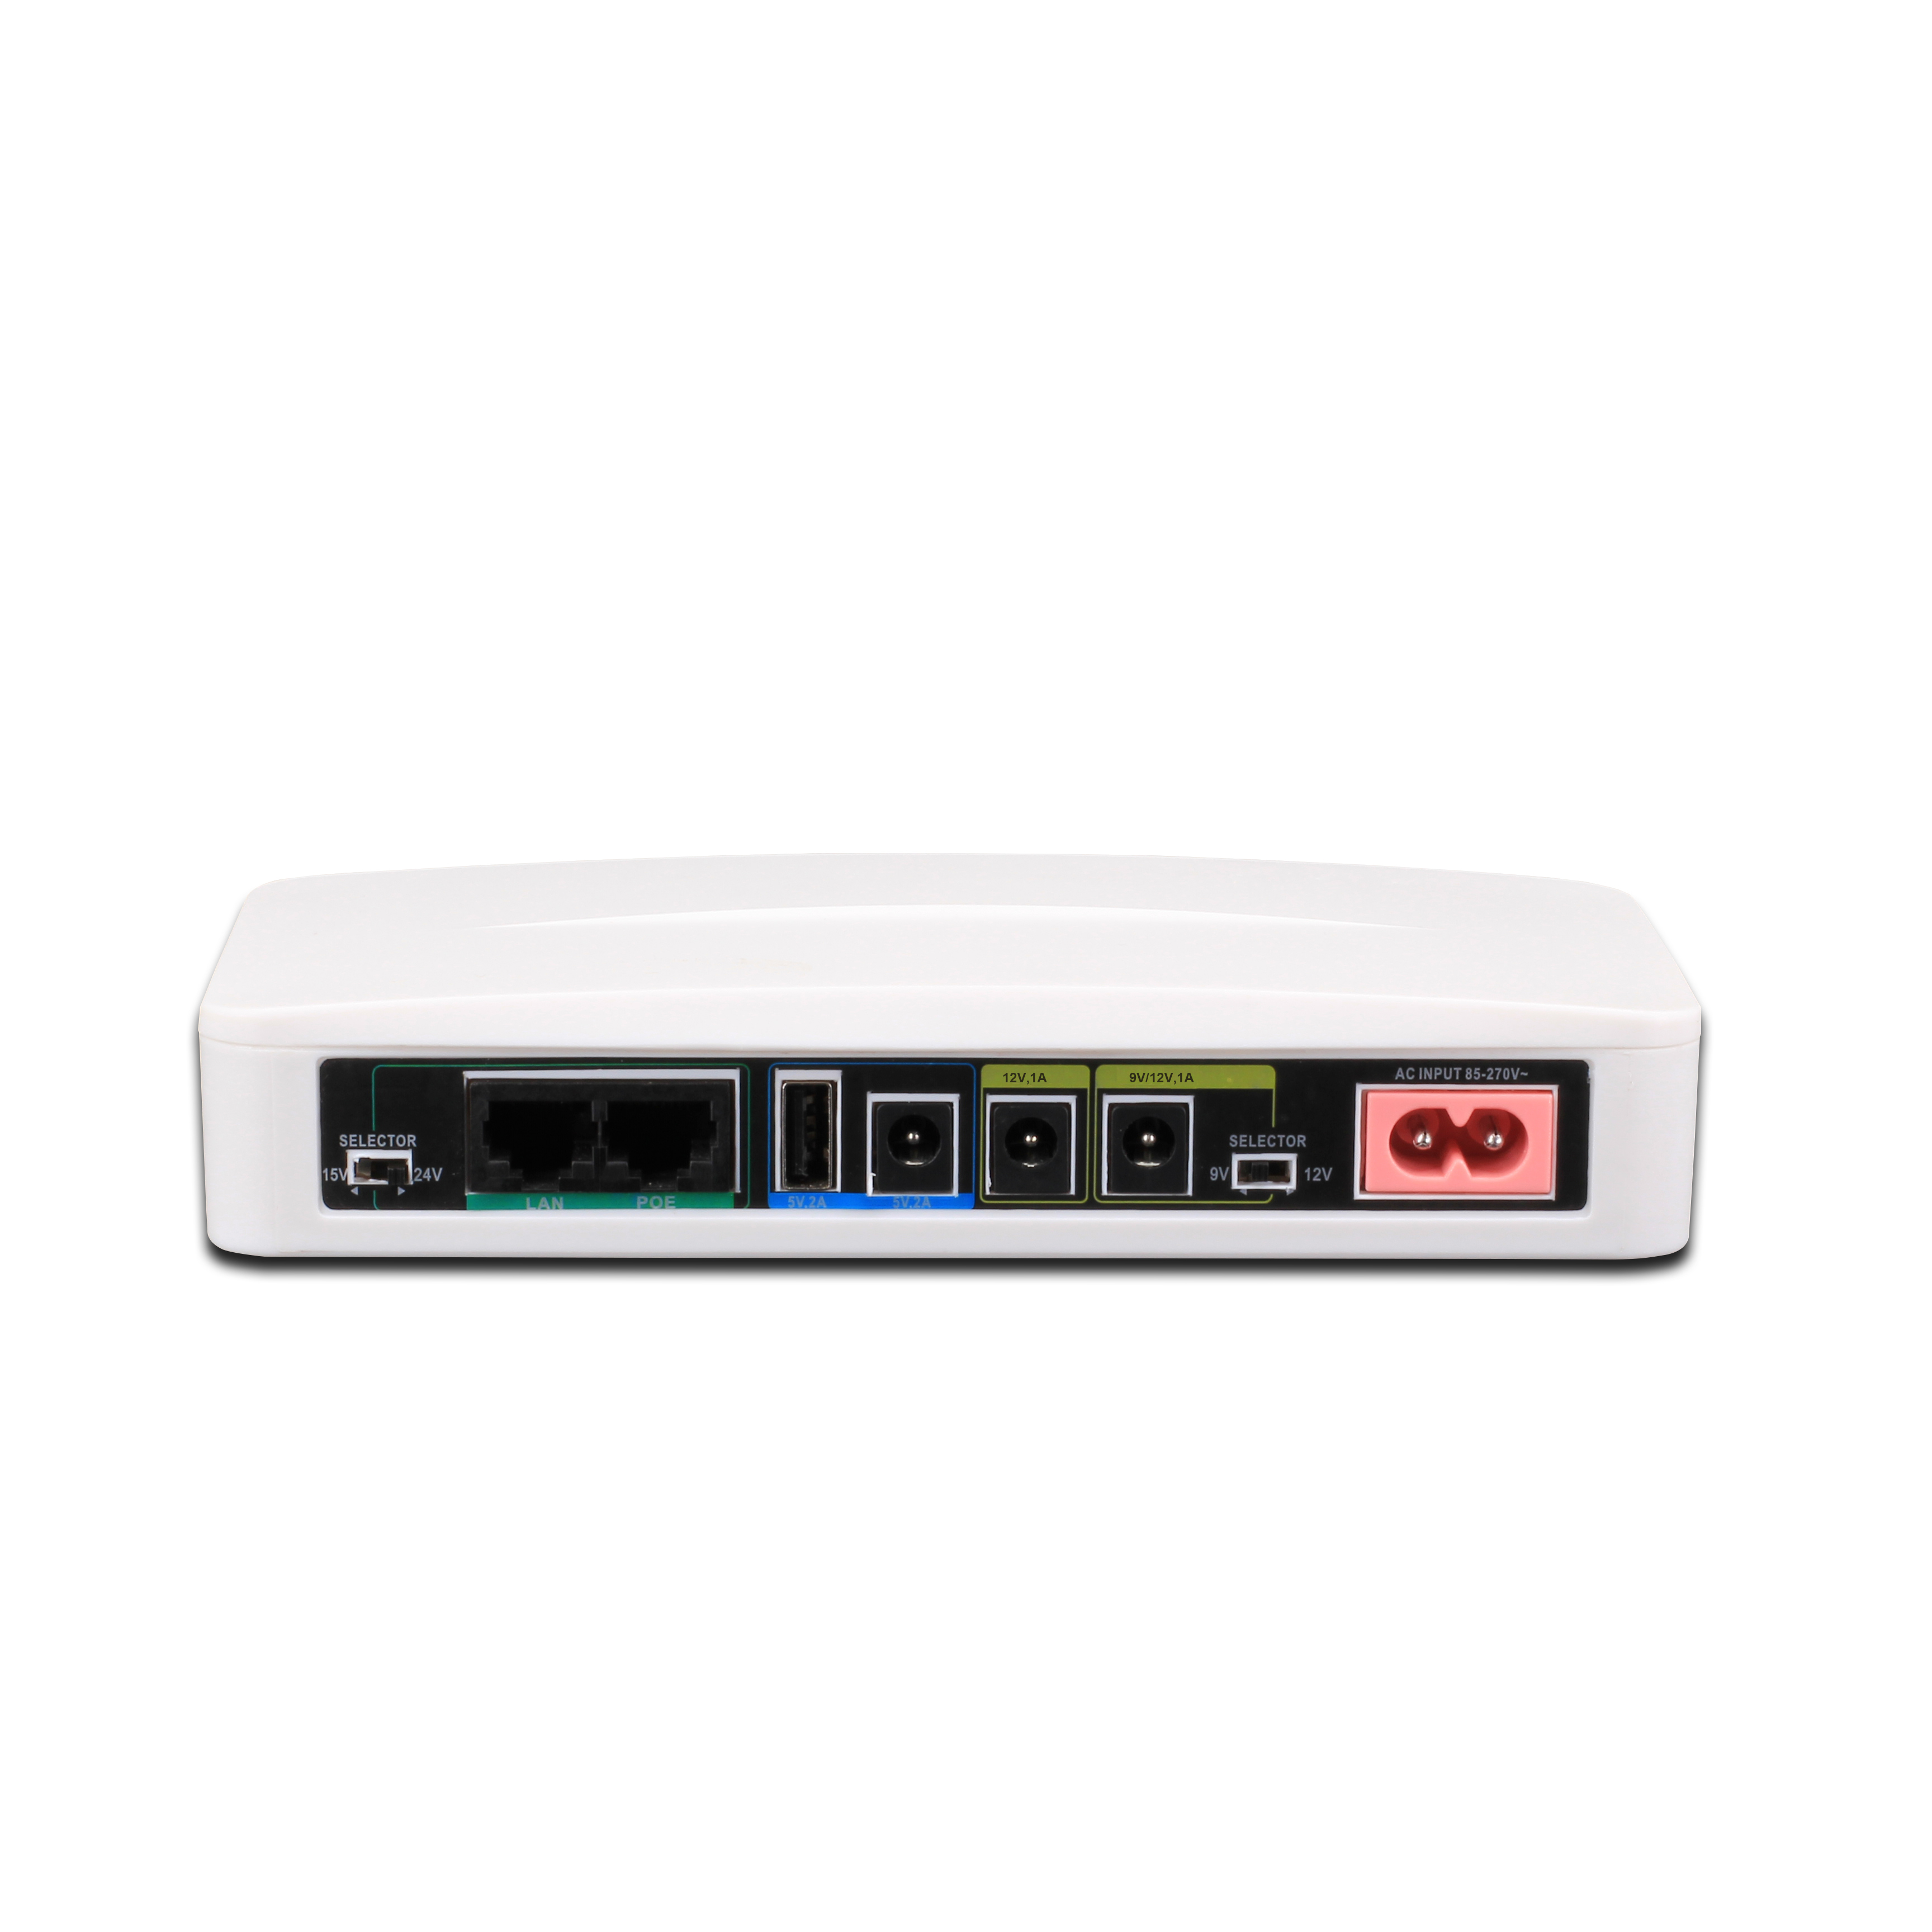 30W DC mini UPS with 5V 9V 12V 15V 24V POE for WIFI router modem CCTV application